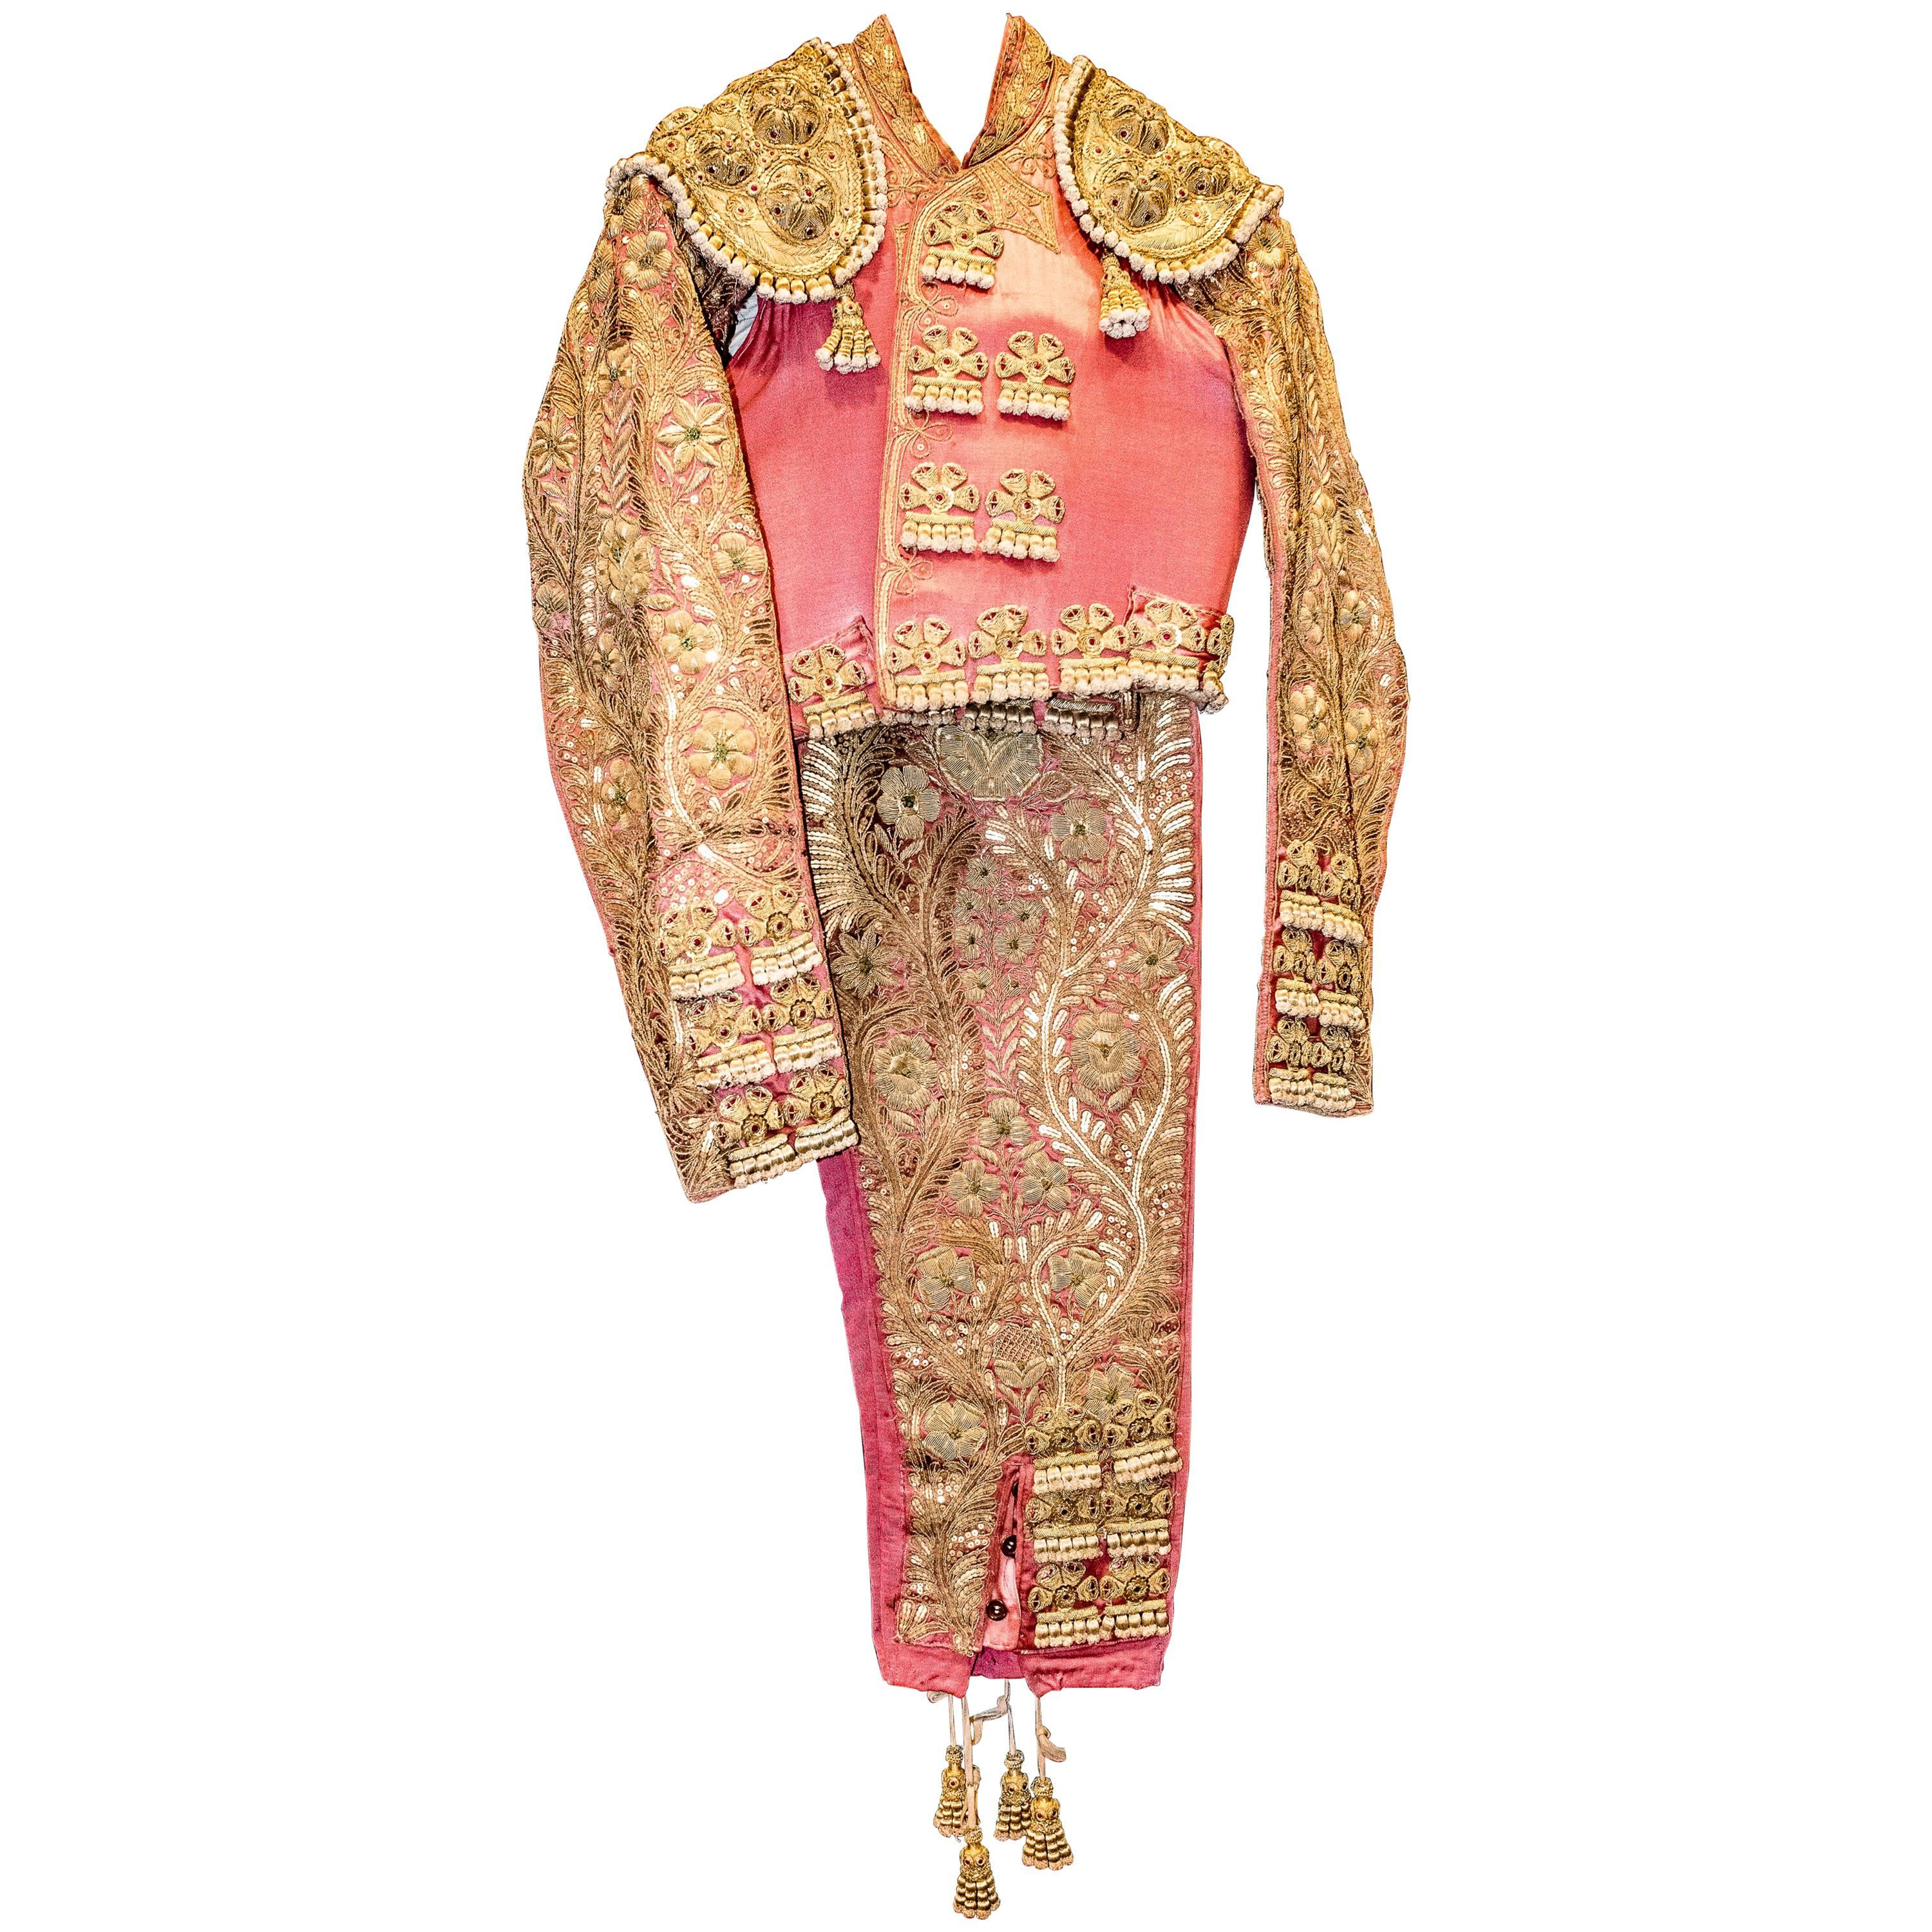  Mid-20th Century Folk-Art Gold and Pink Silk Spanish Matador Costume